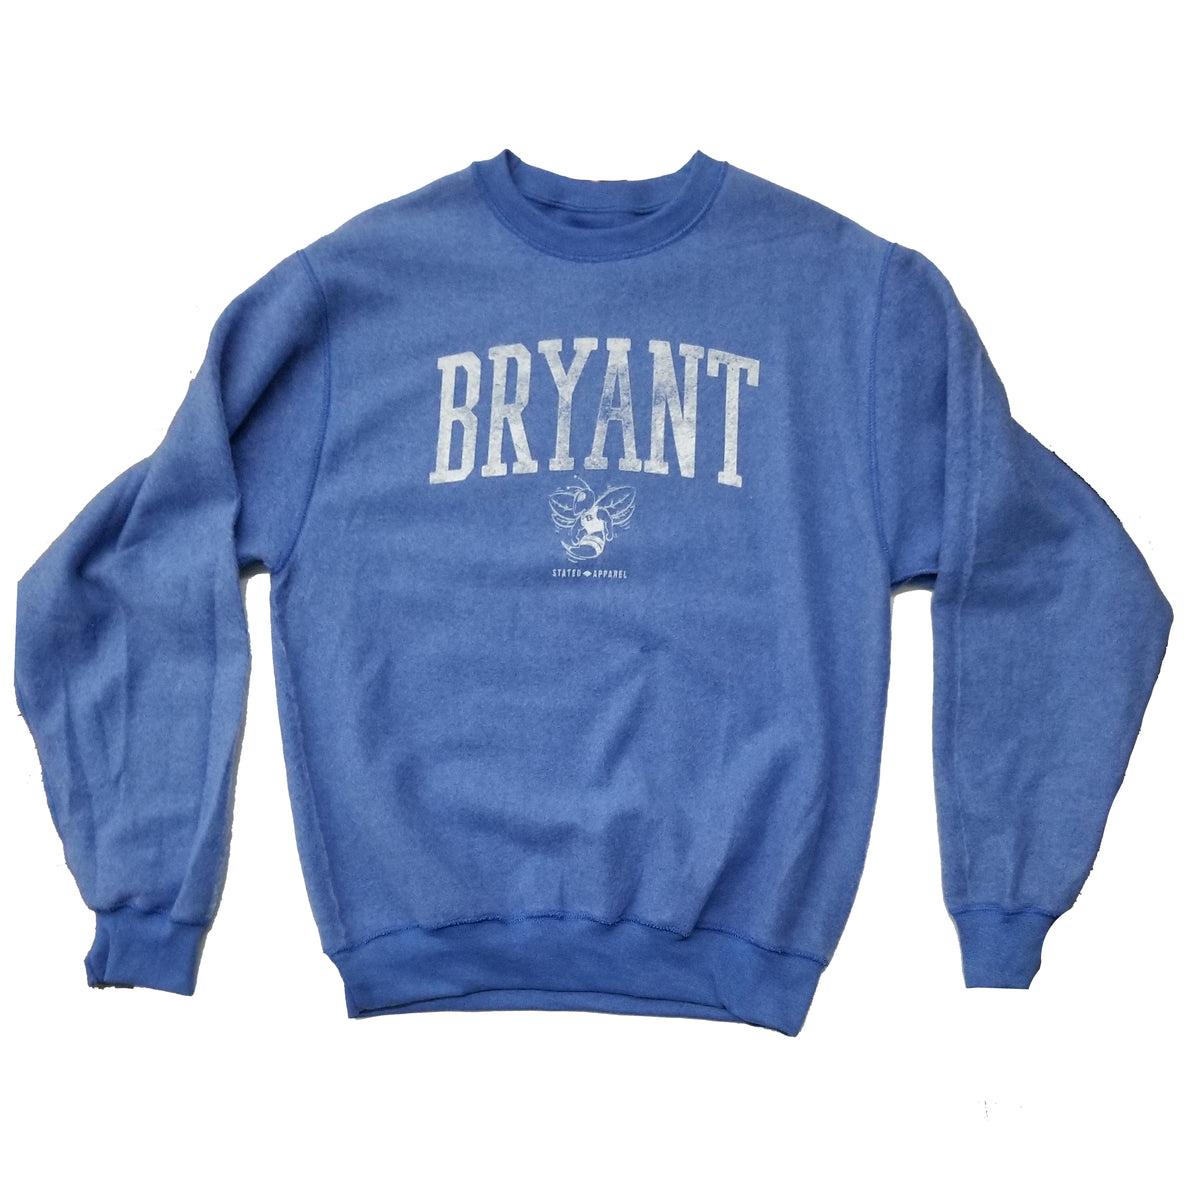 Bryant Tall Arch inverted sweatshirt